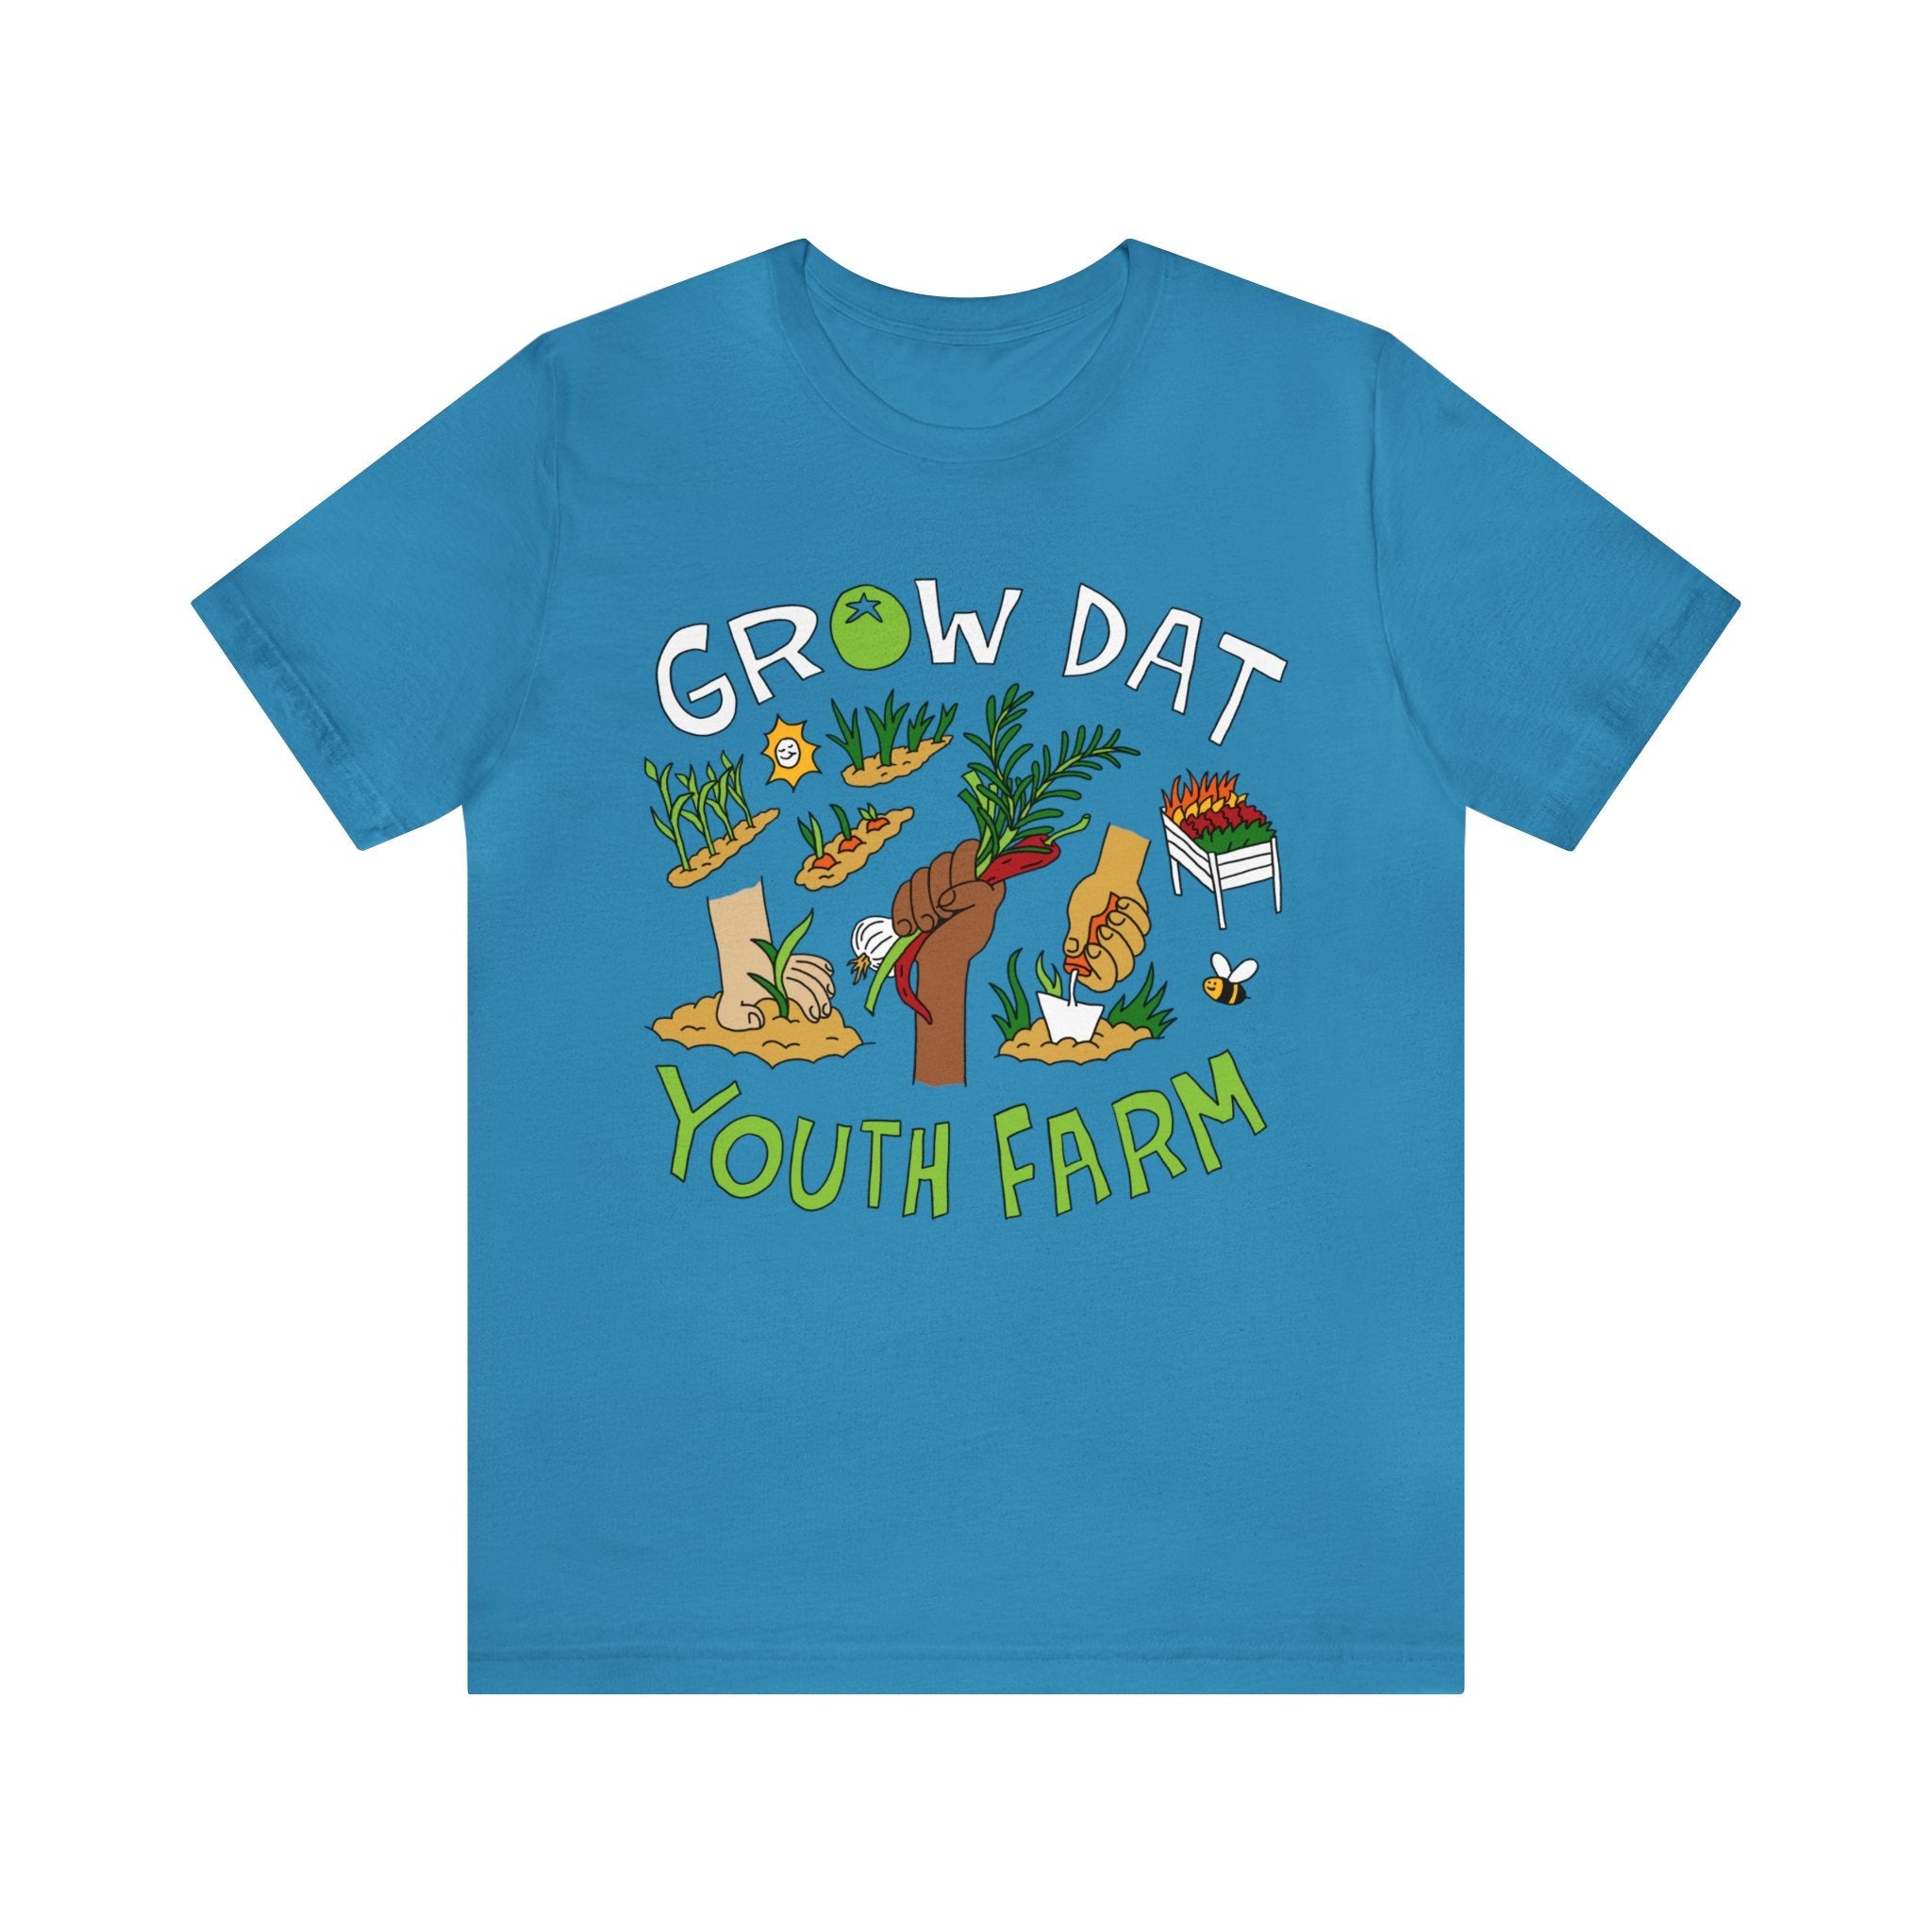 Grow Dat Youth Farm - Dirty Coast Press